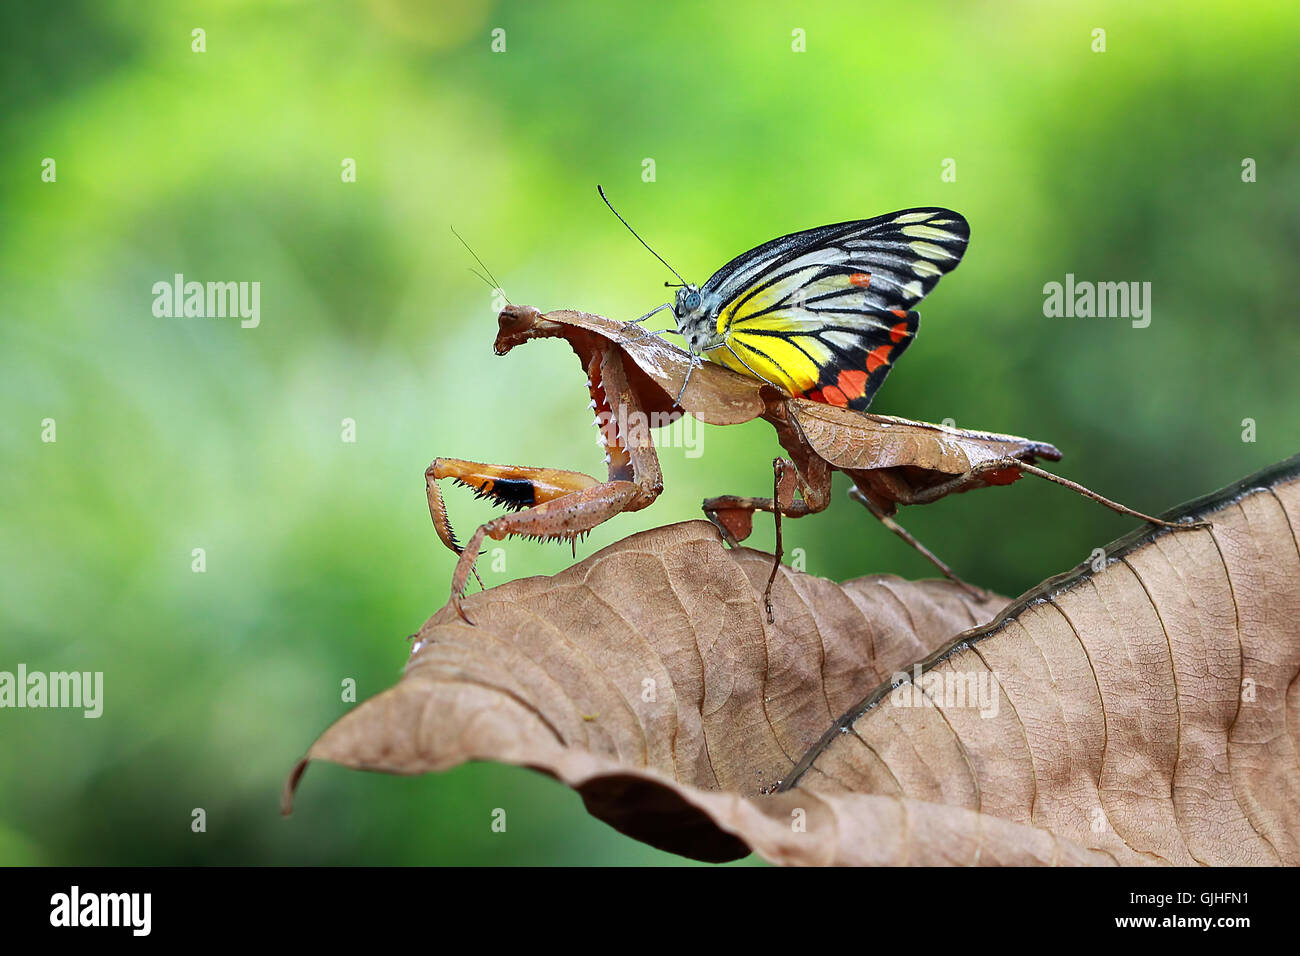 Butterfly sitting on mantis, Indonésie Banque D'Images